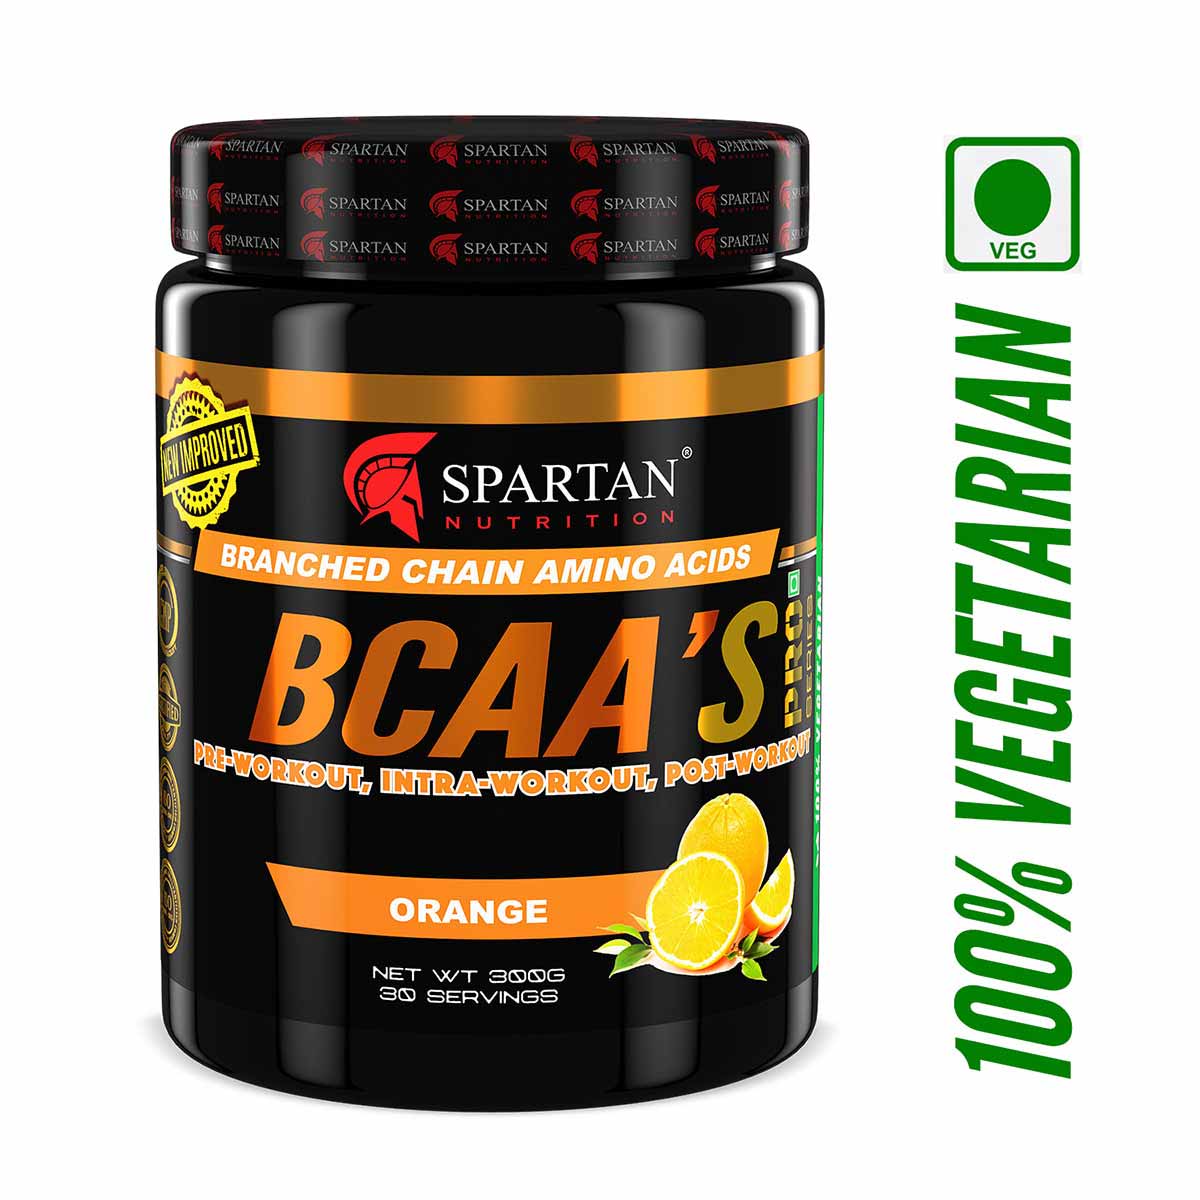 Spartan Nutrition BCAA’s Pro - 300g, with L-Leucine – 3500mg, L-Isoleucine - 1750 mg, Glutamine - 1000 mg Per Serving